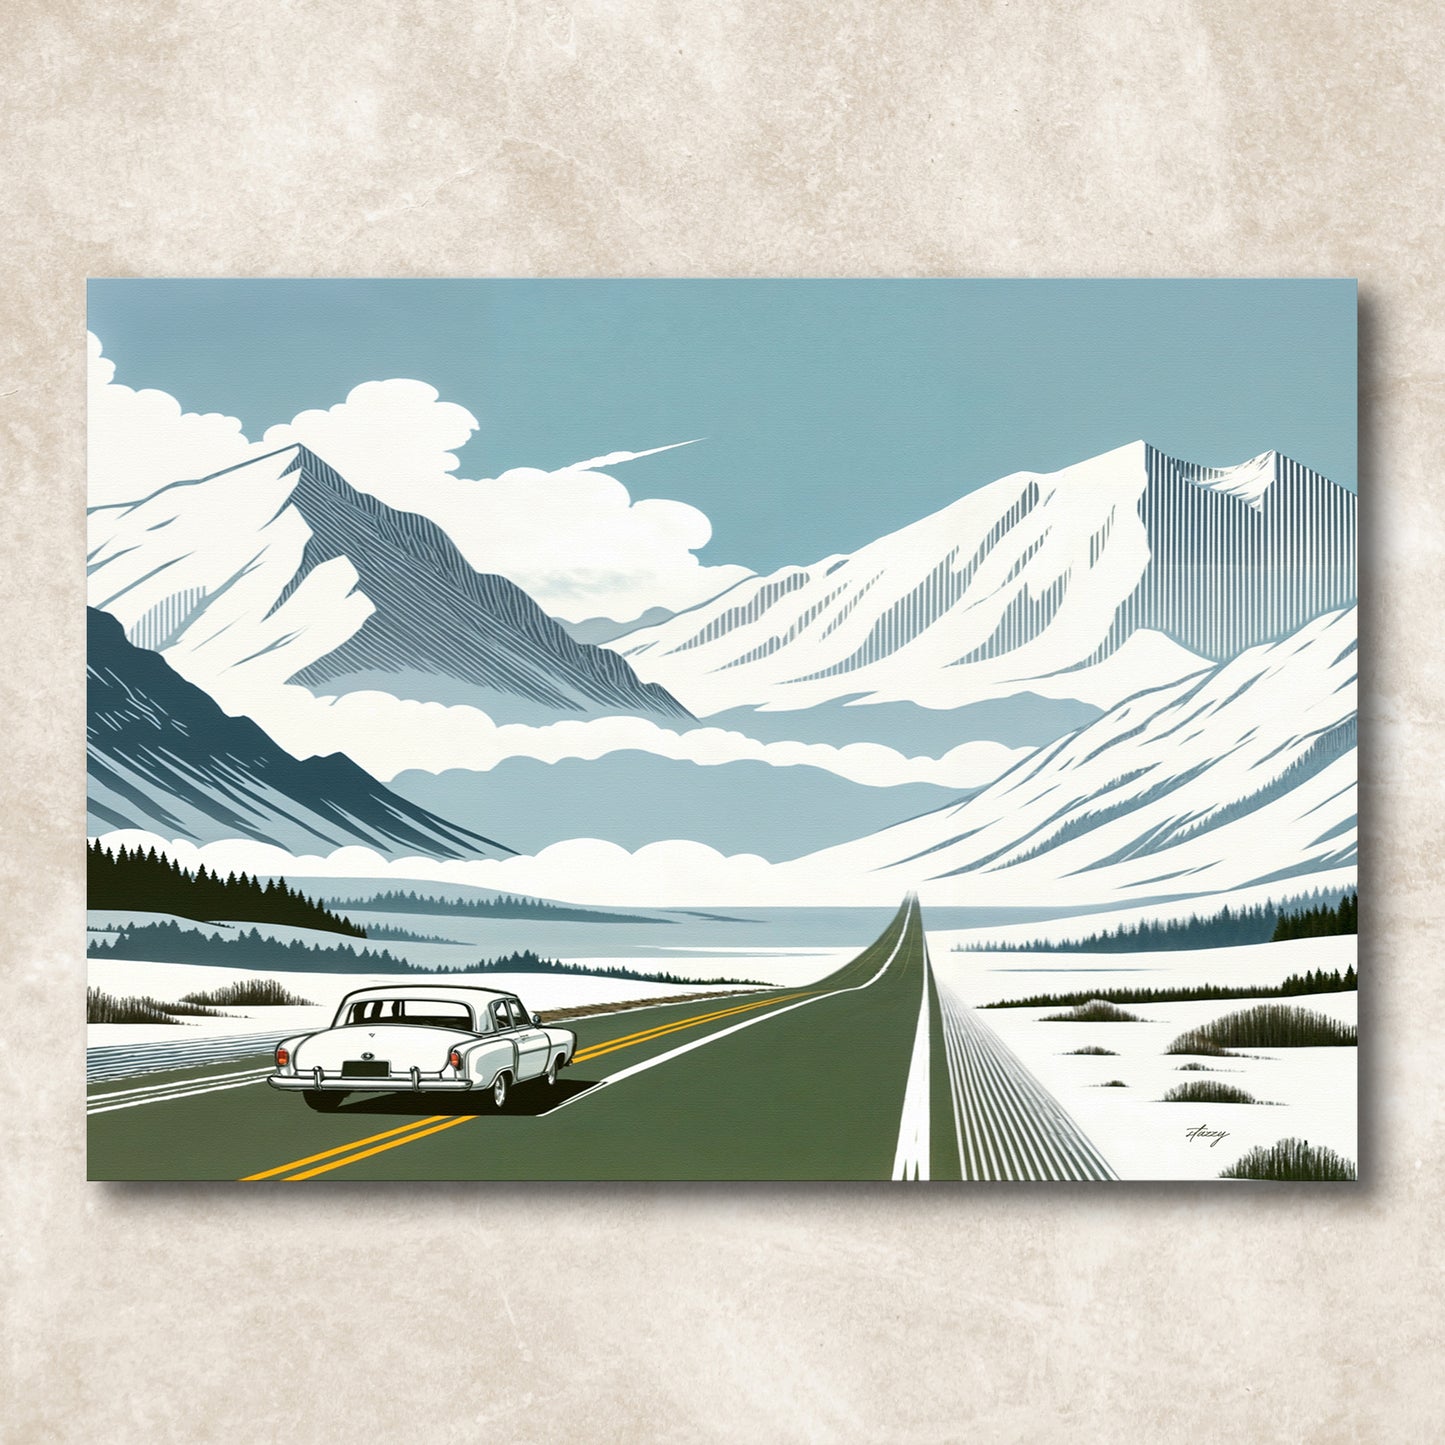 Canvas Print: "Alpine Journey"